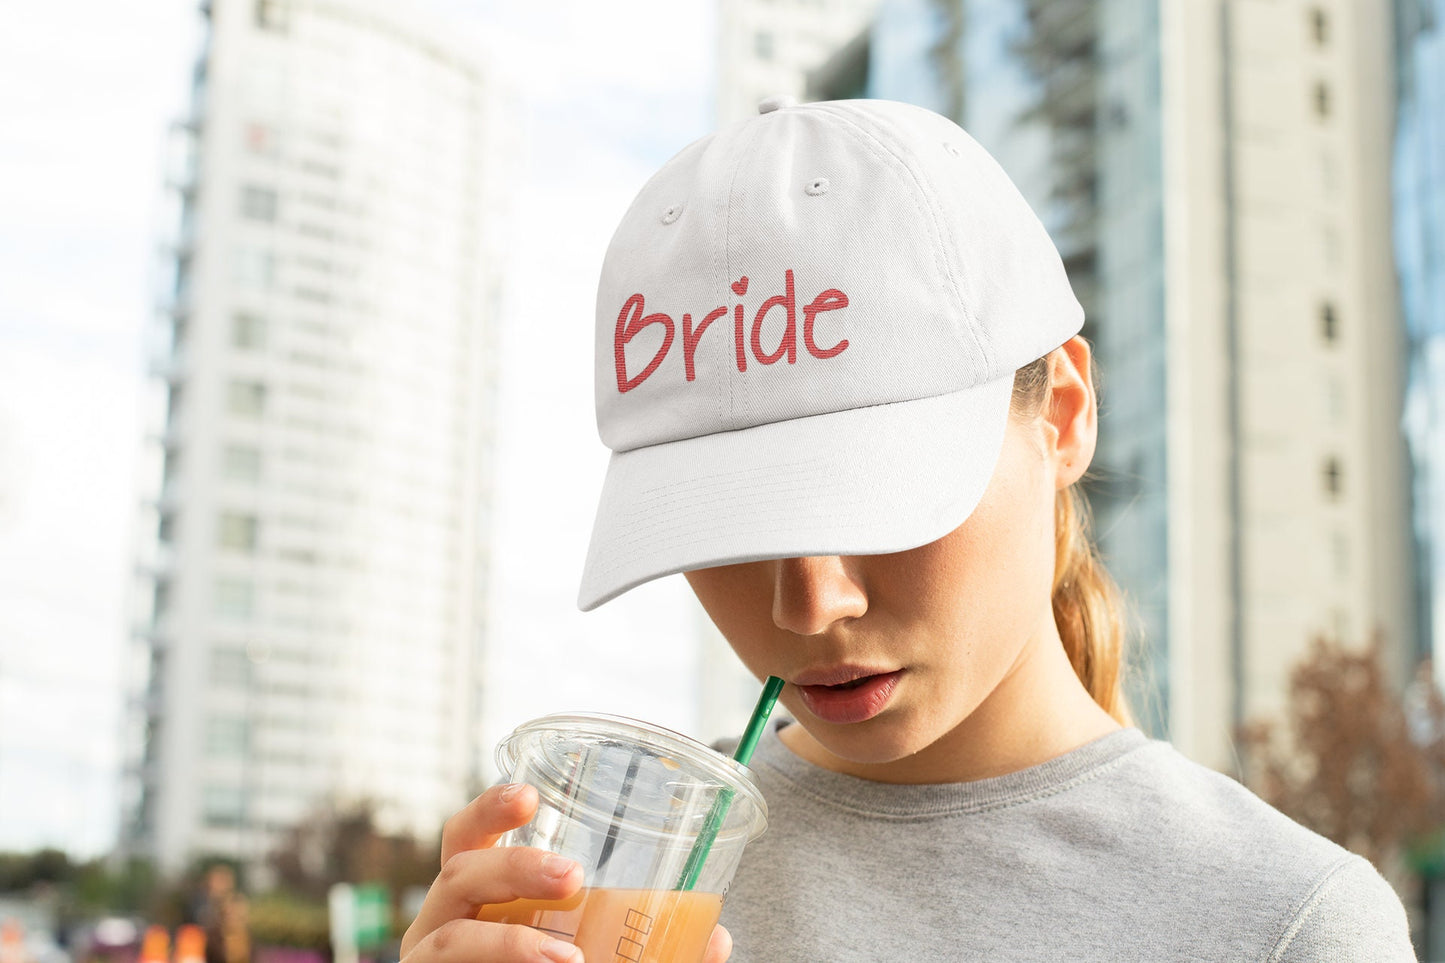 Personalize bride baseball cap Custom wedding party hat with monogram Bride-to-be gift idea Bride and bridesmaid matching cap Wedding attire